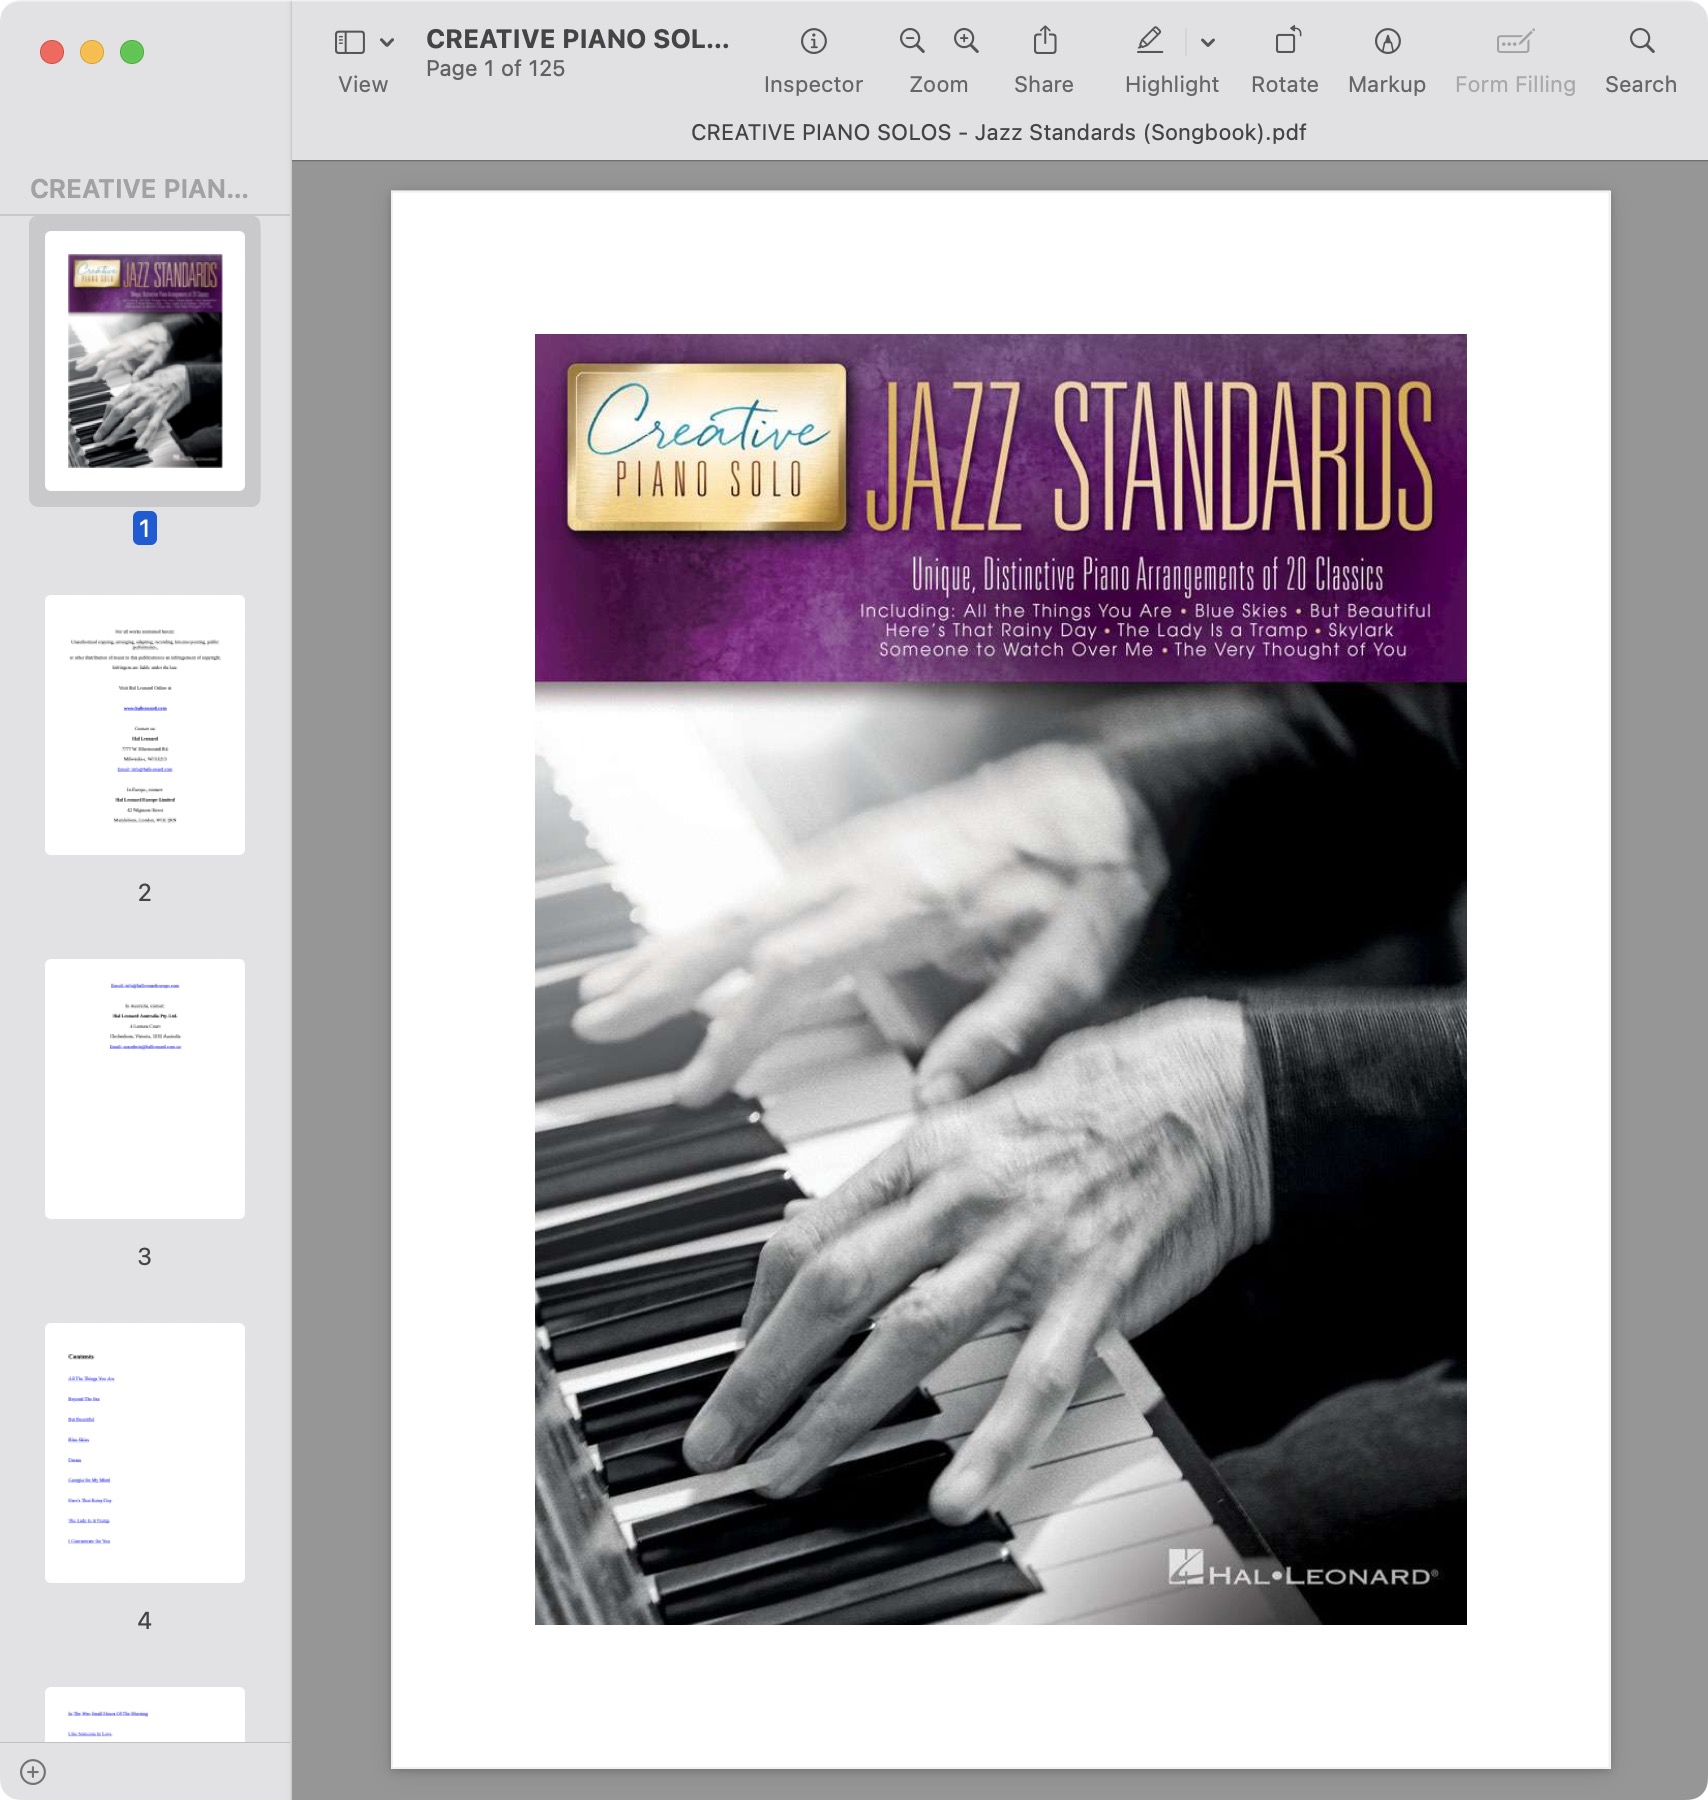 CREATIVE PIANO SOLOS - Jazz Standards (Songbook).jpg